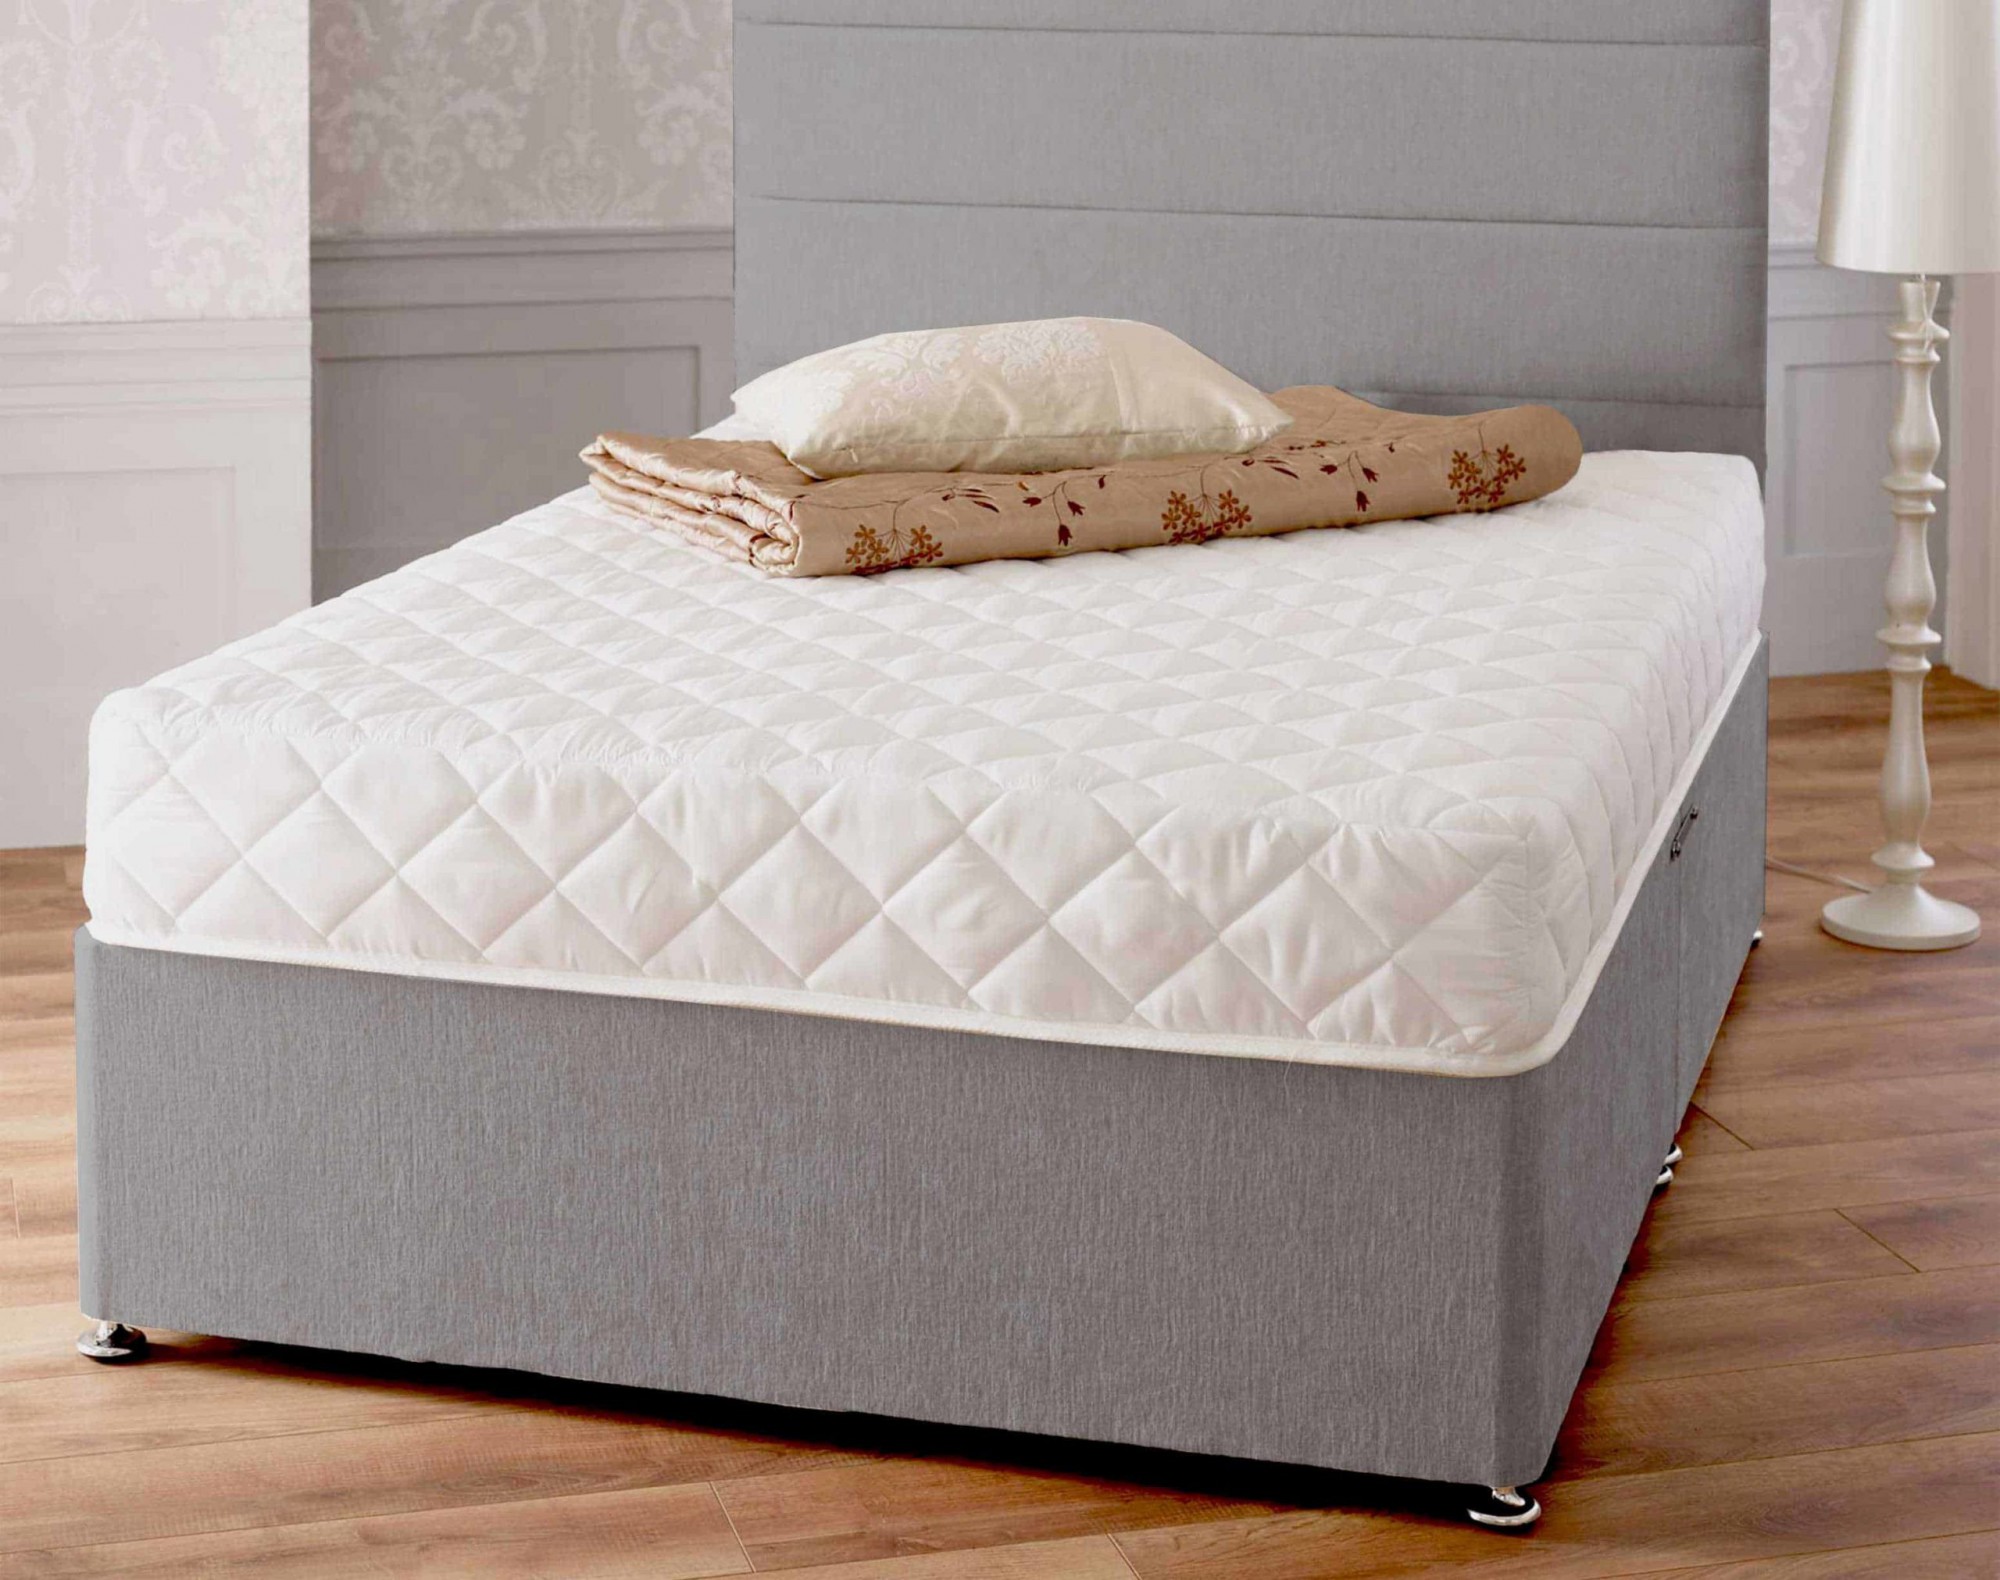 bonnell mattress or memory foam